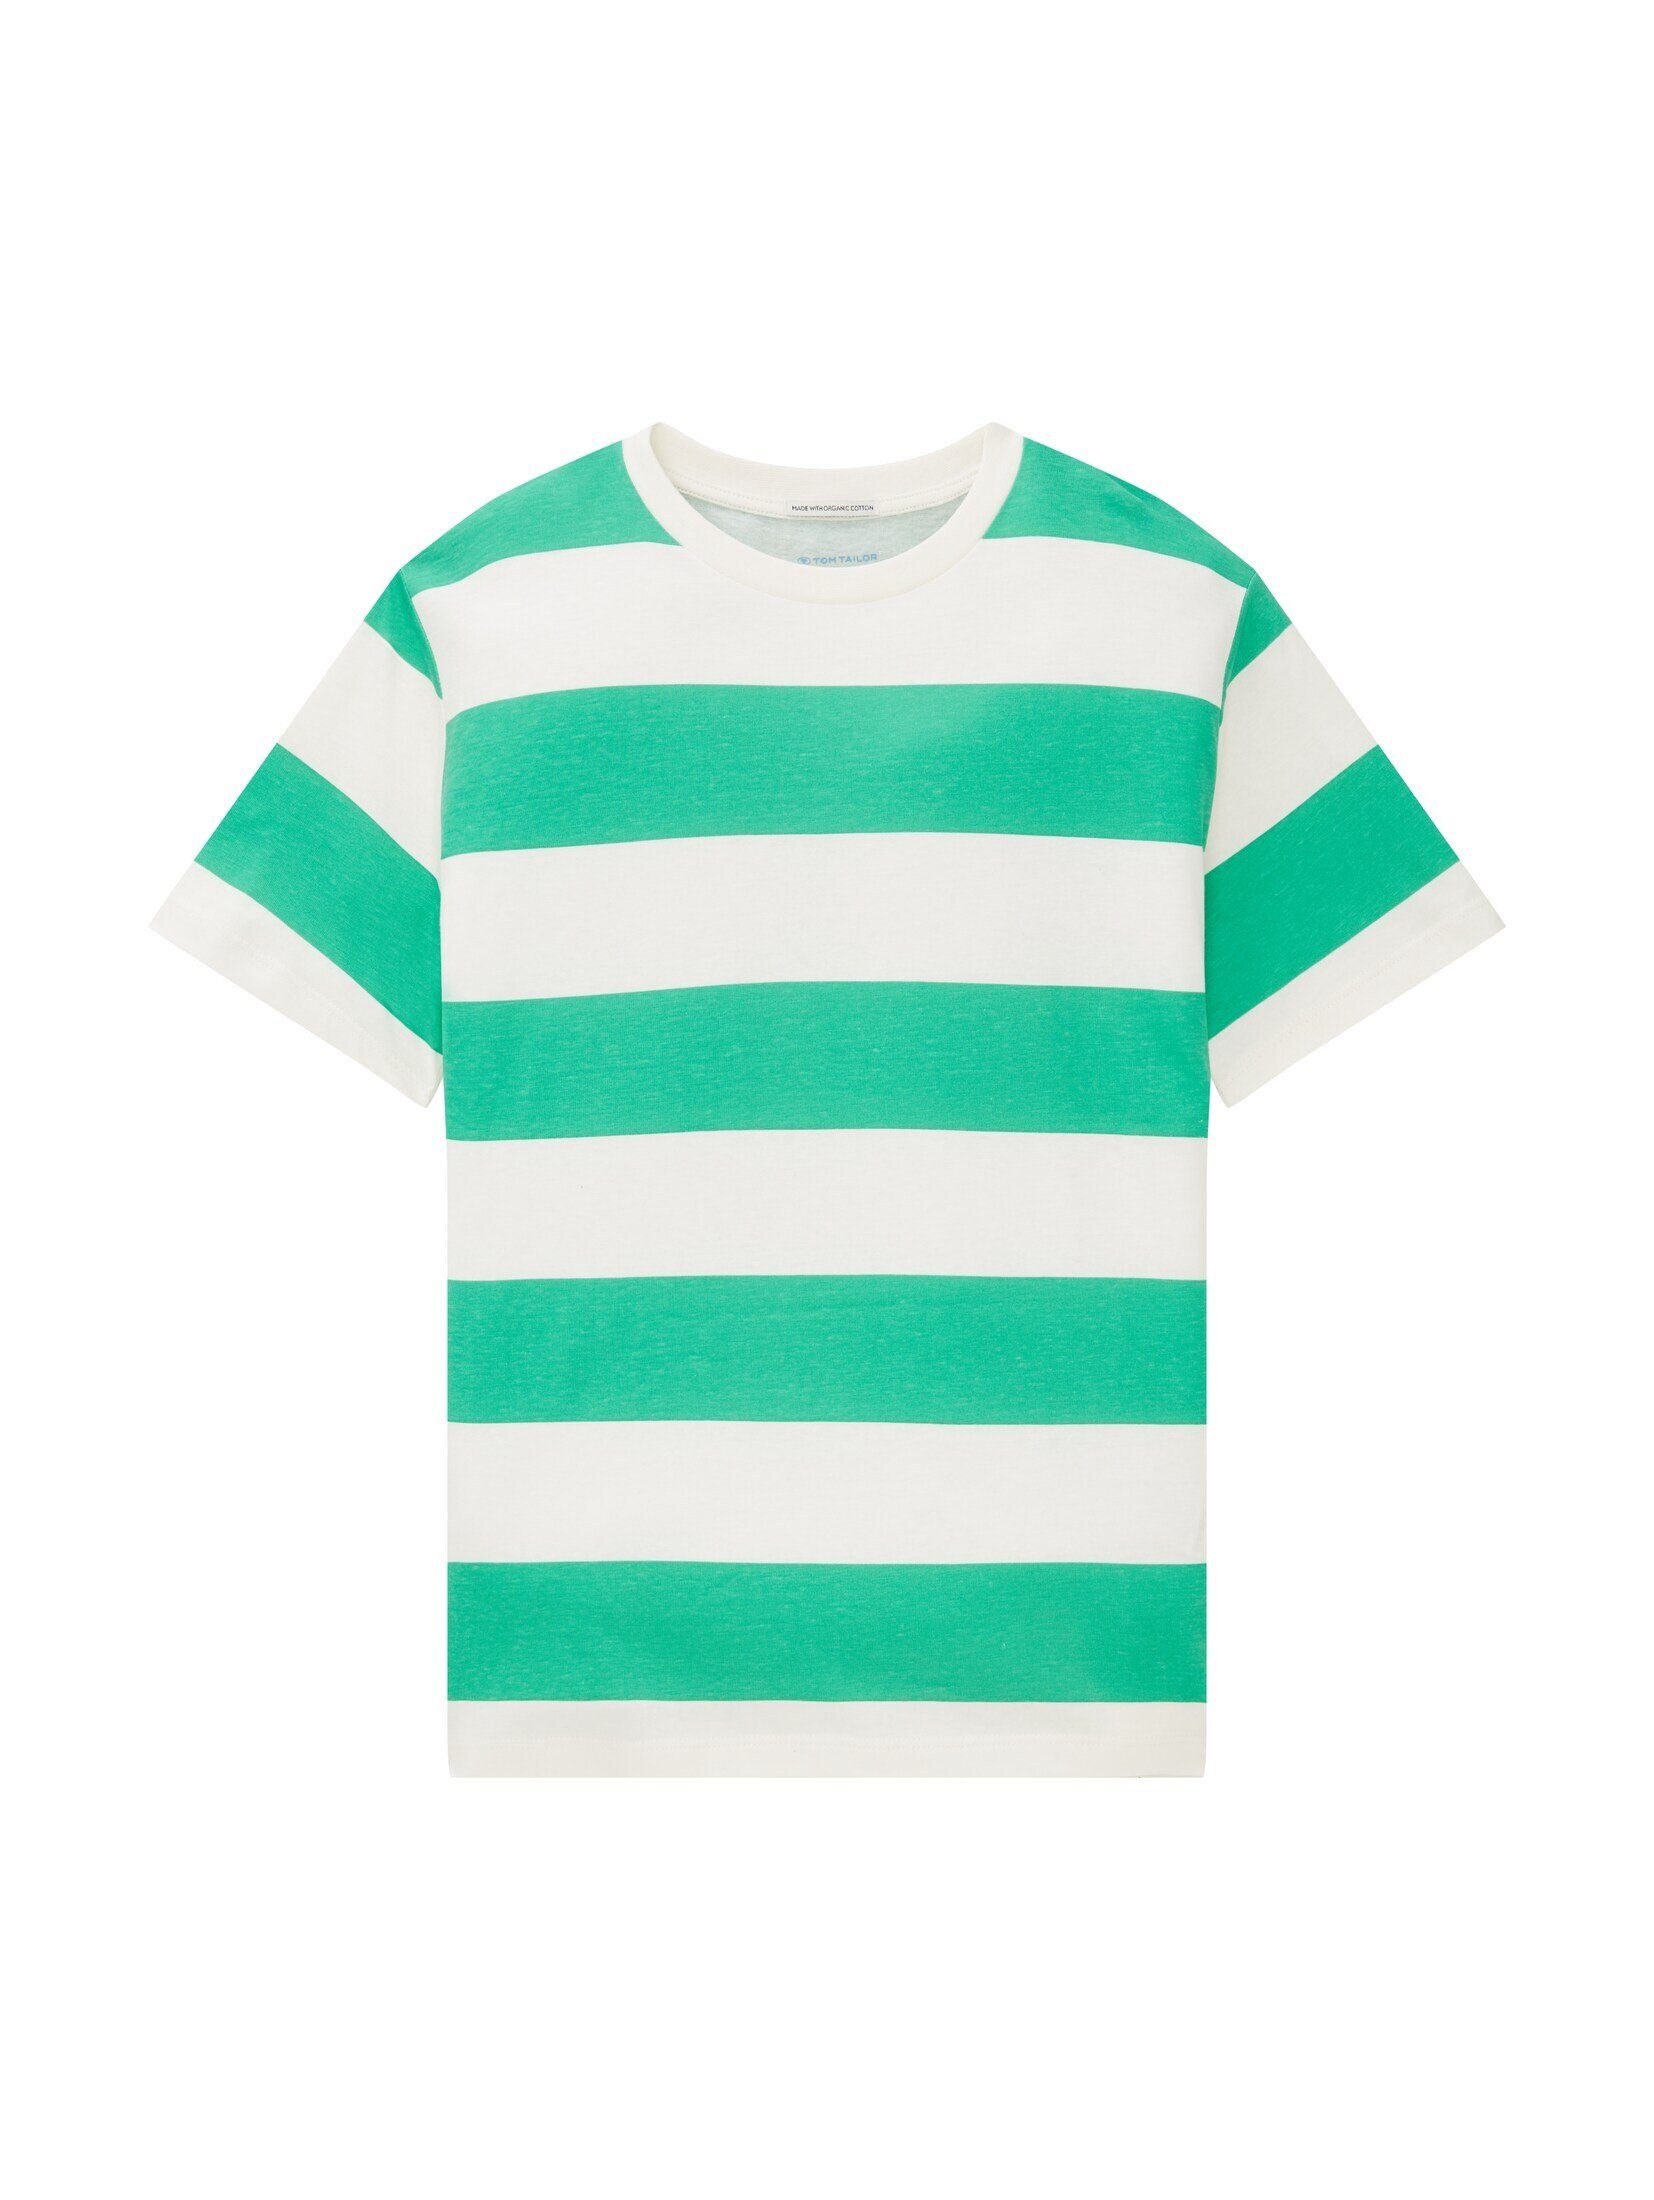 TOM TAILOR T-Shirt Gestreiftes T-Shirt green off white block stripe